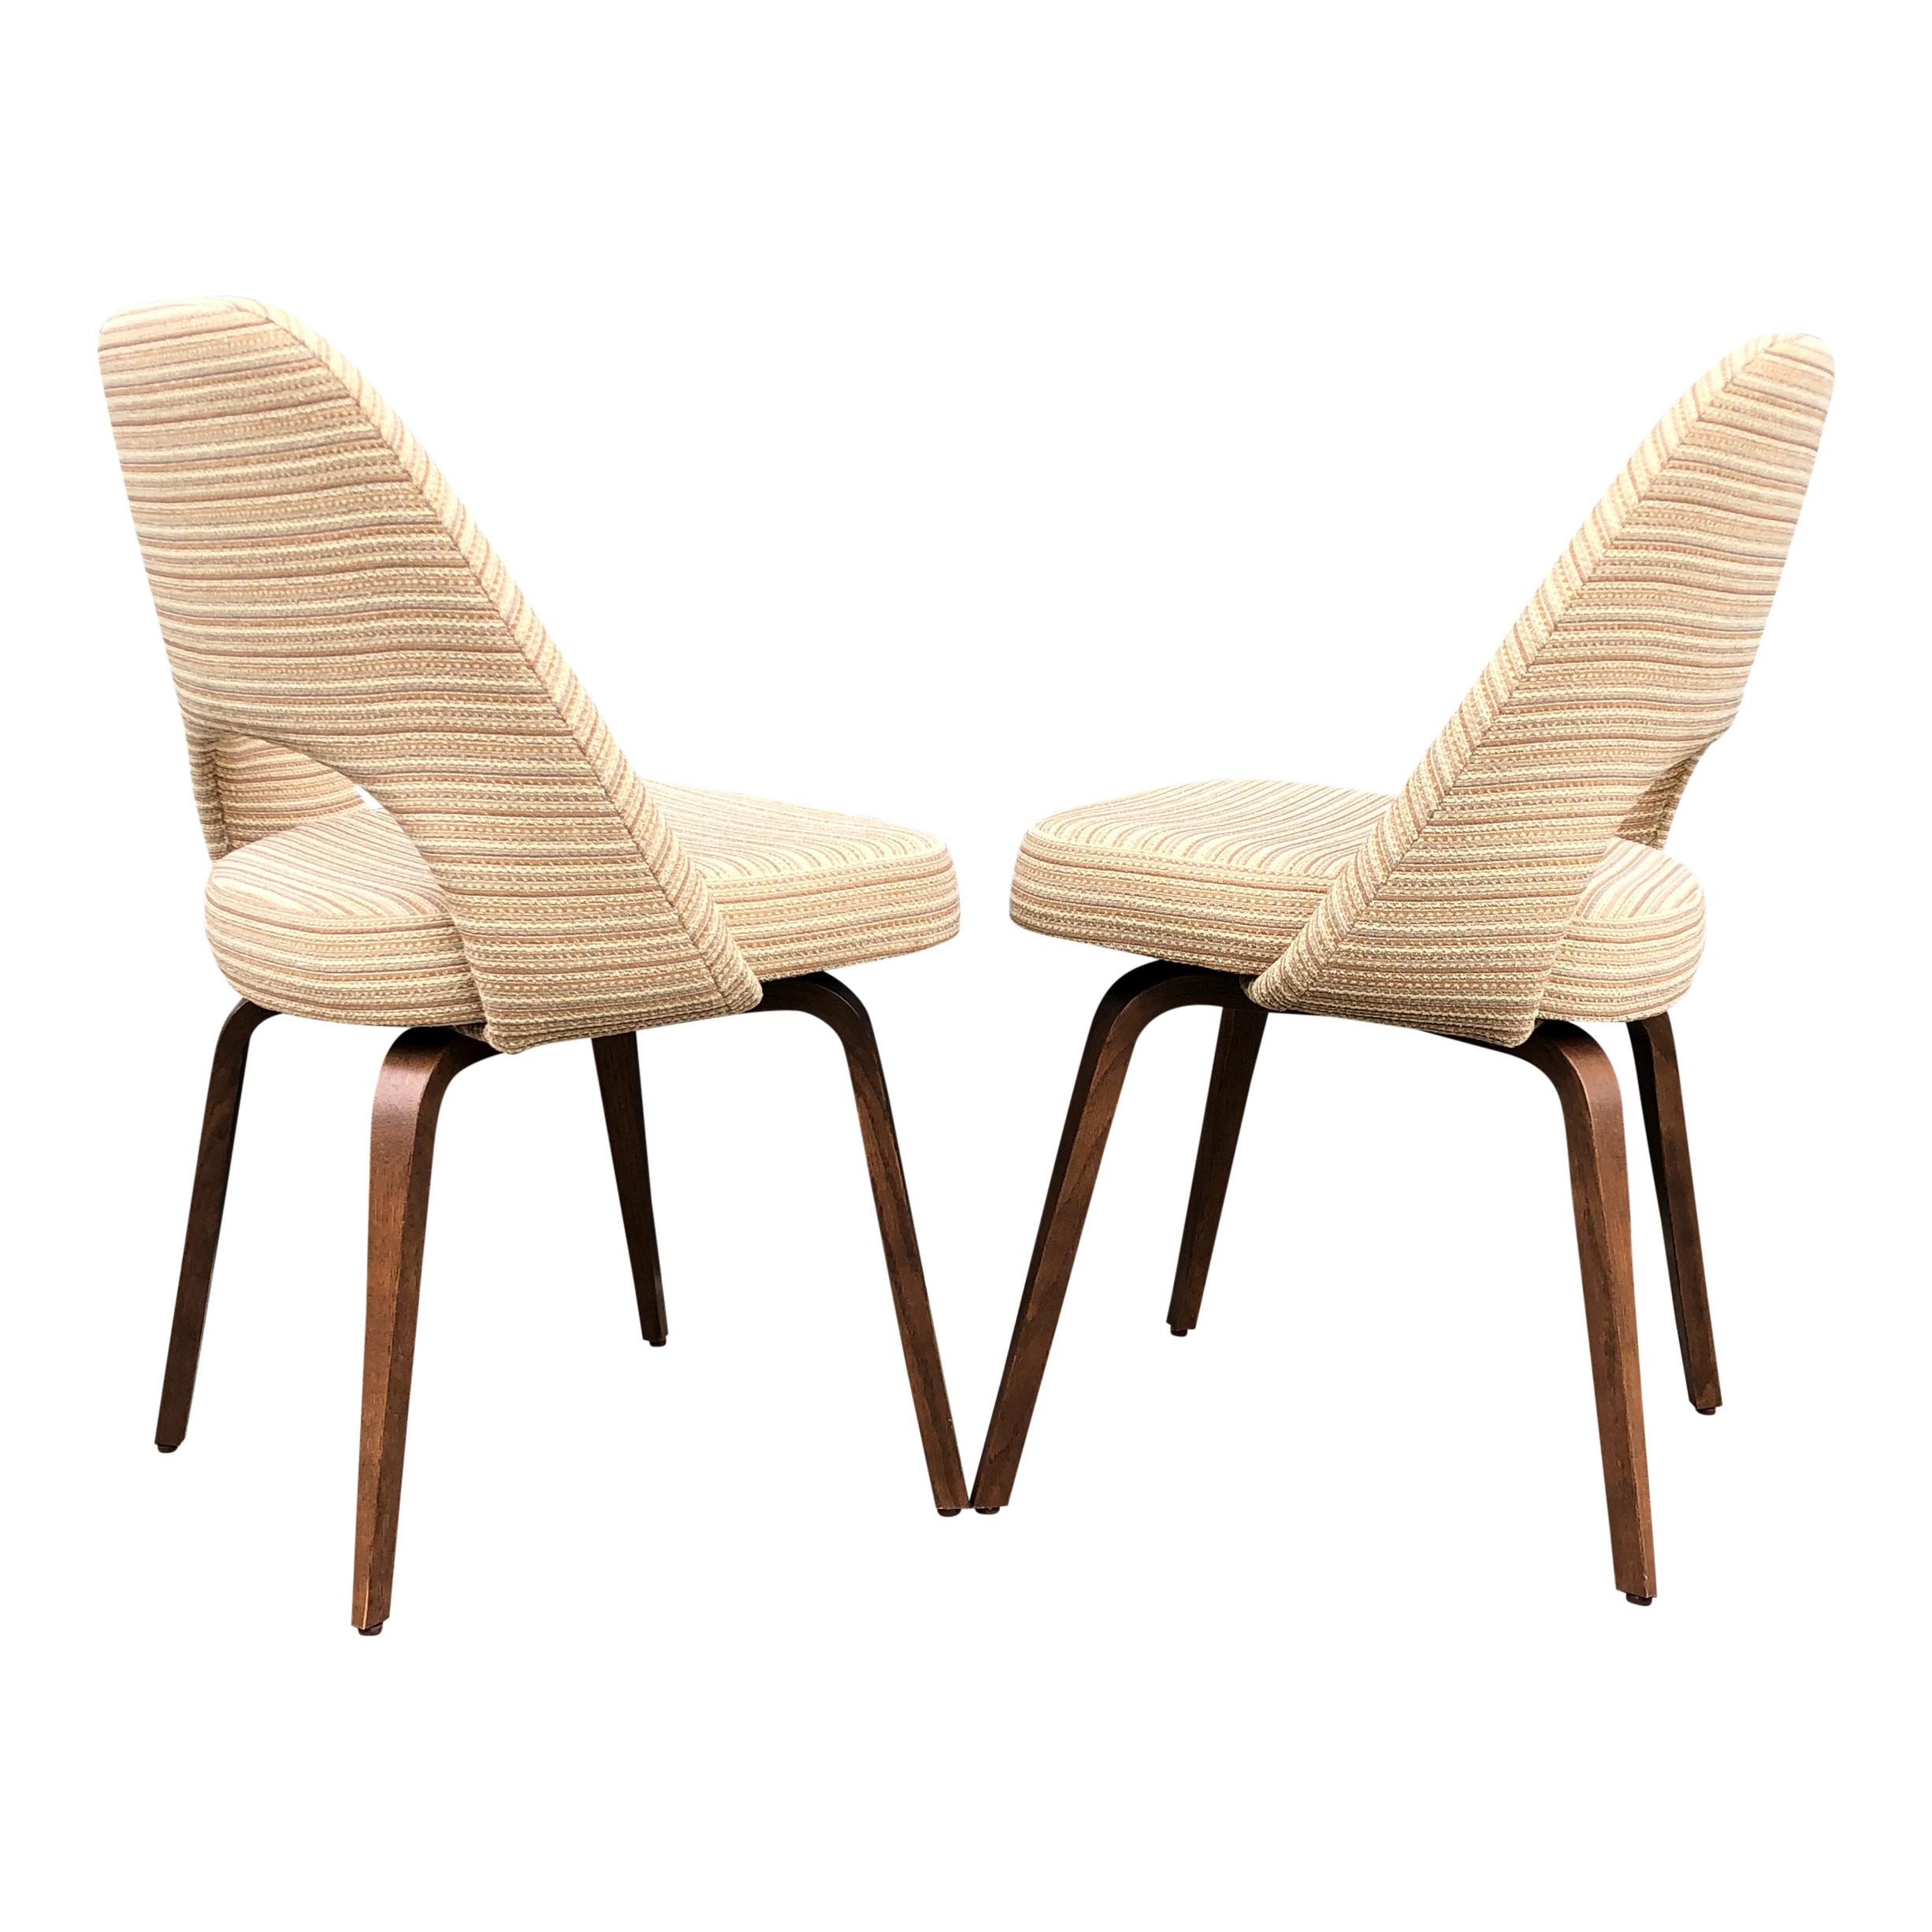 Eero Saarinen for Knoll Side Chairs on Wooden Legs 1